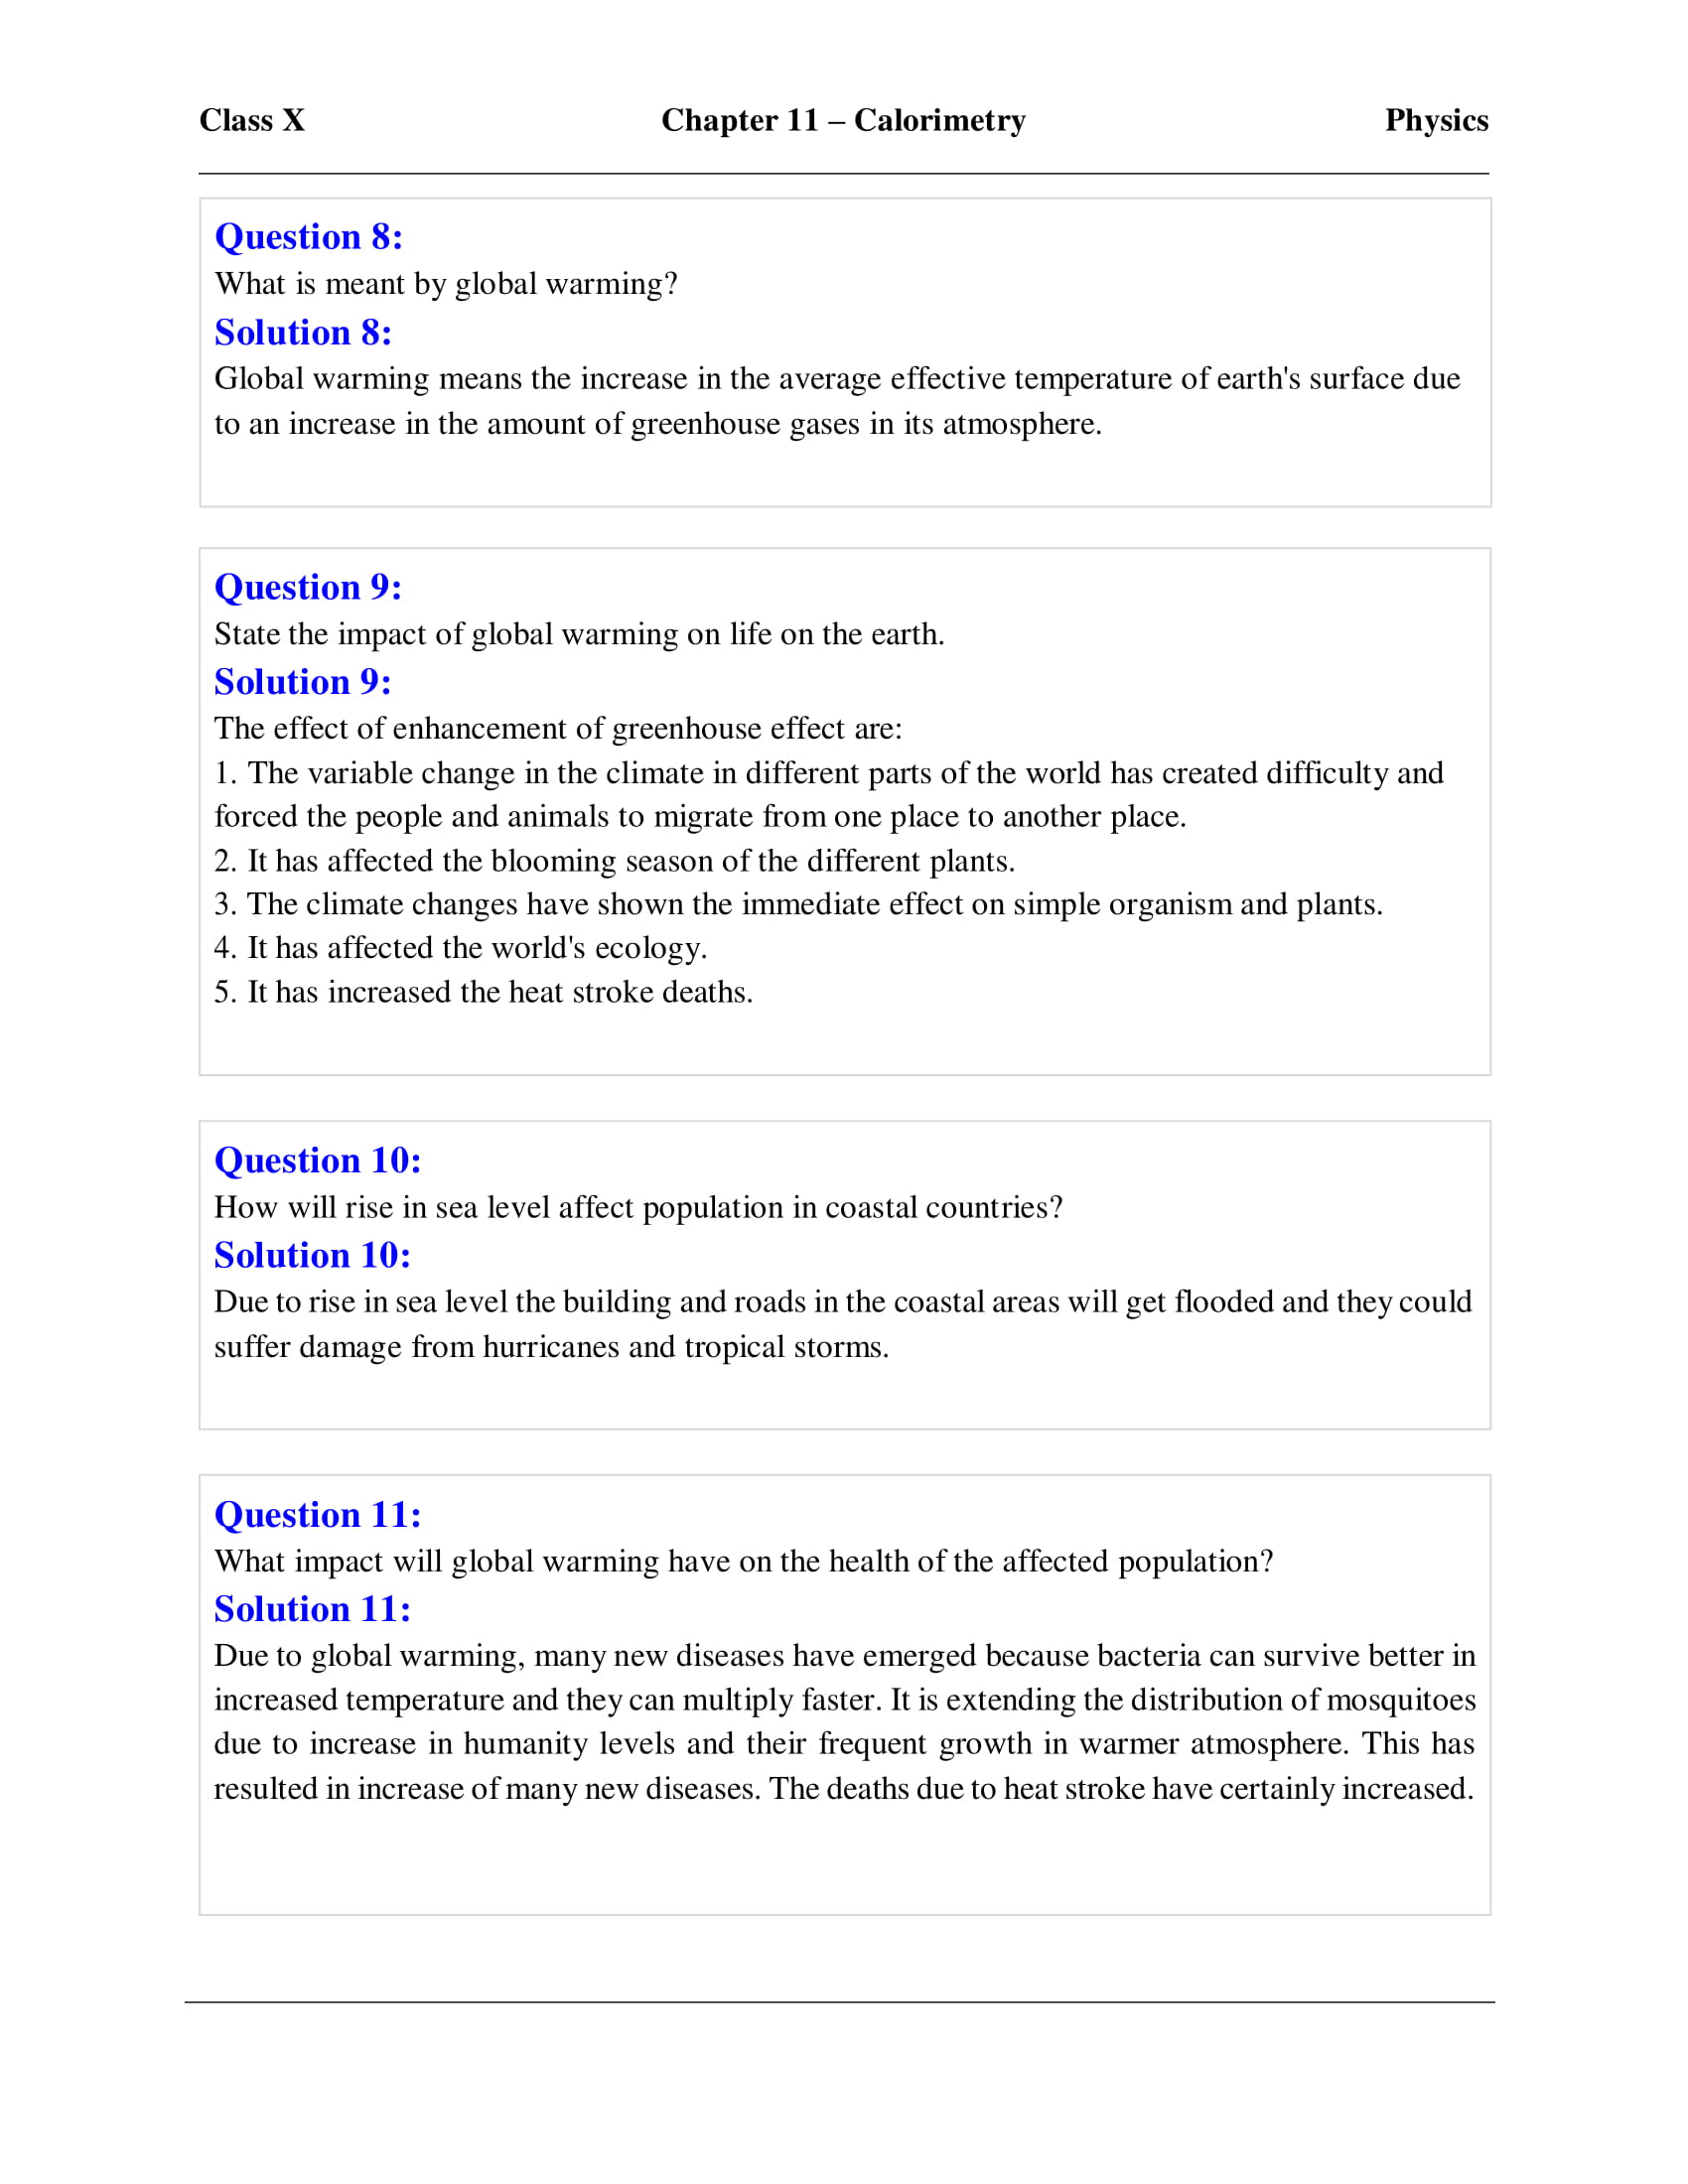 class 10 physics book pdf